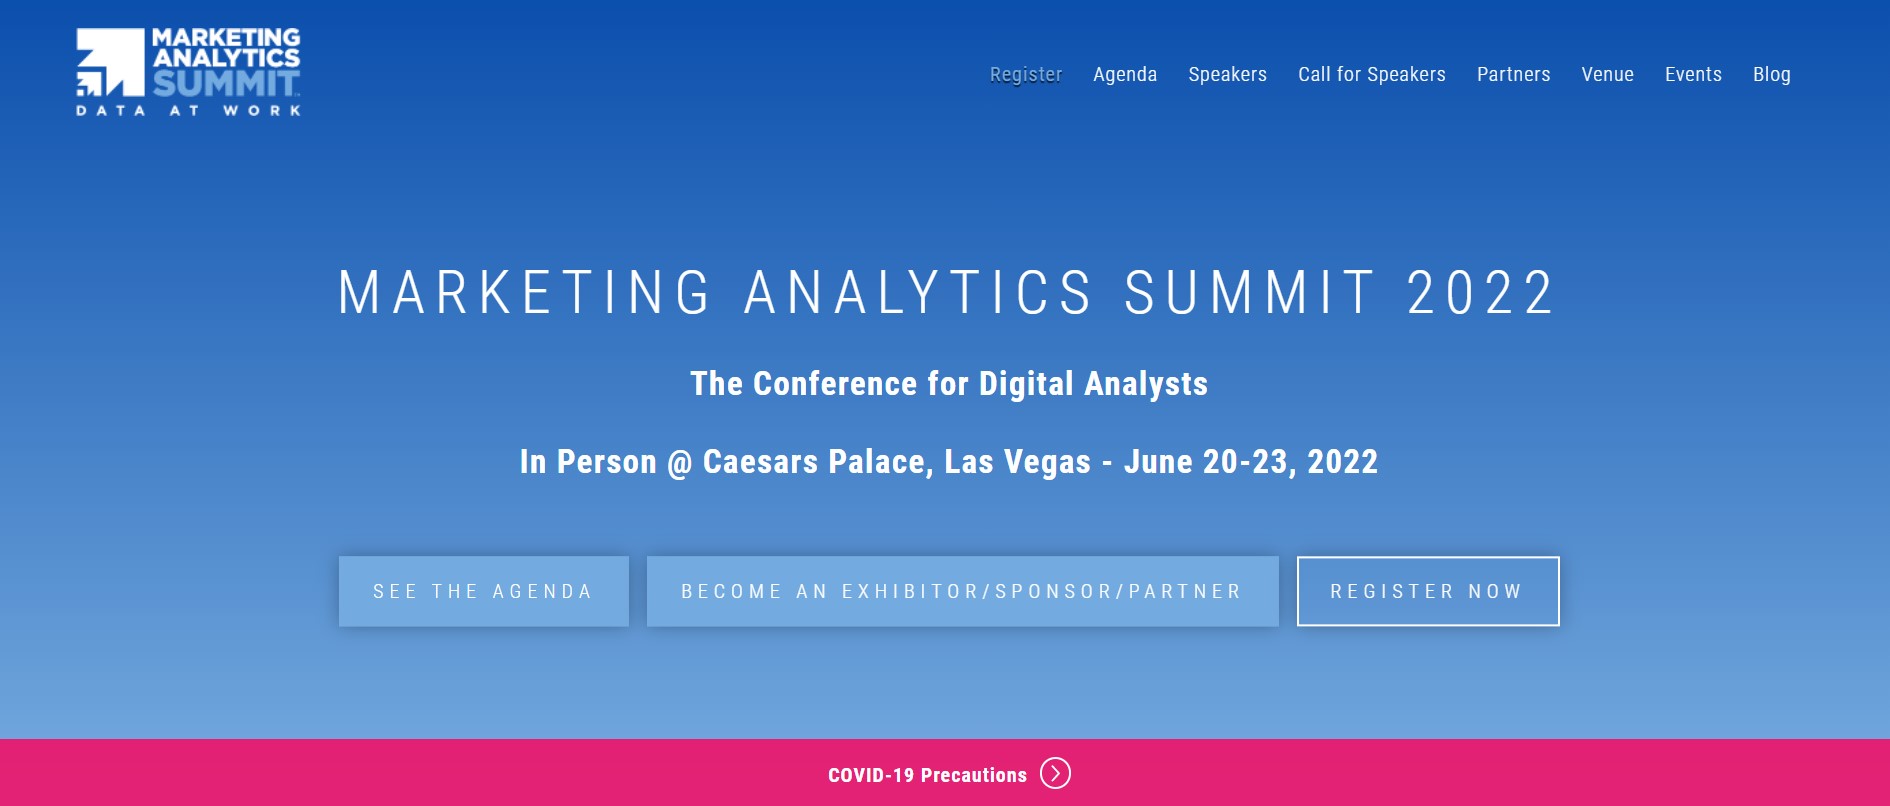 Marketing Analytics Summit 2022